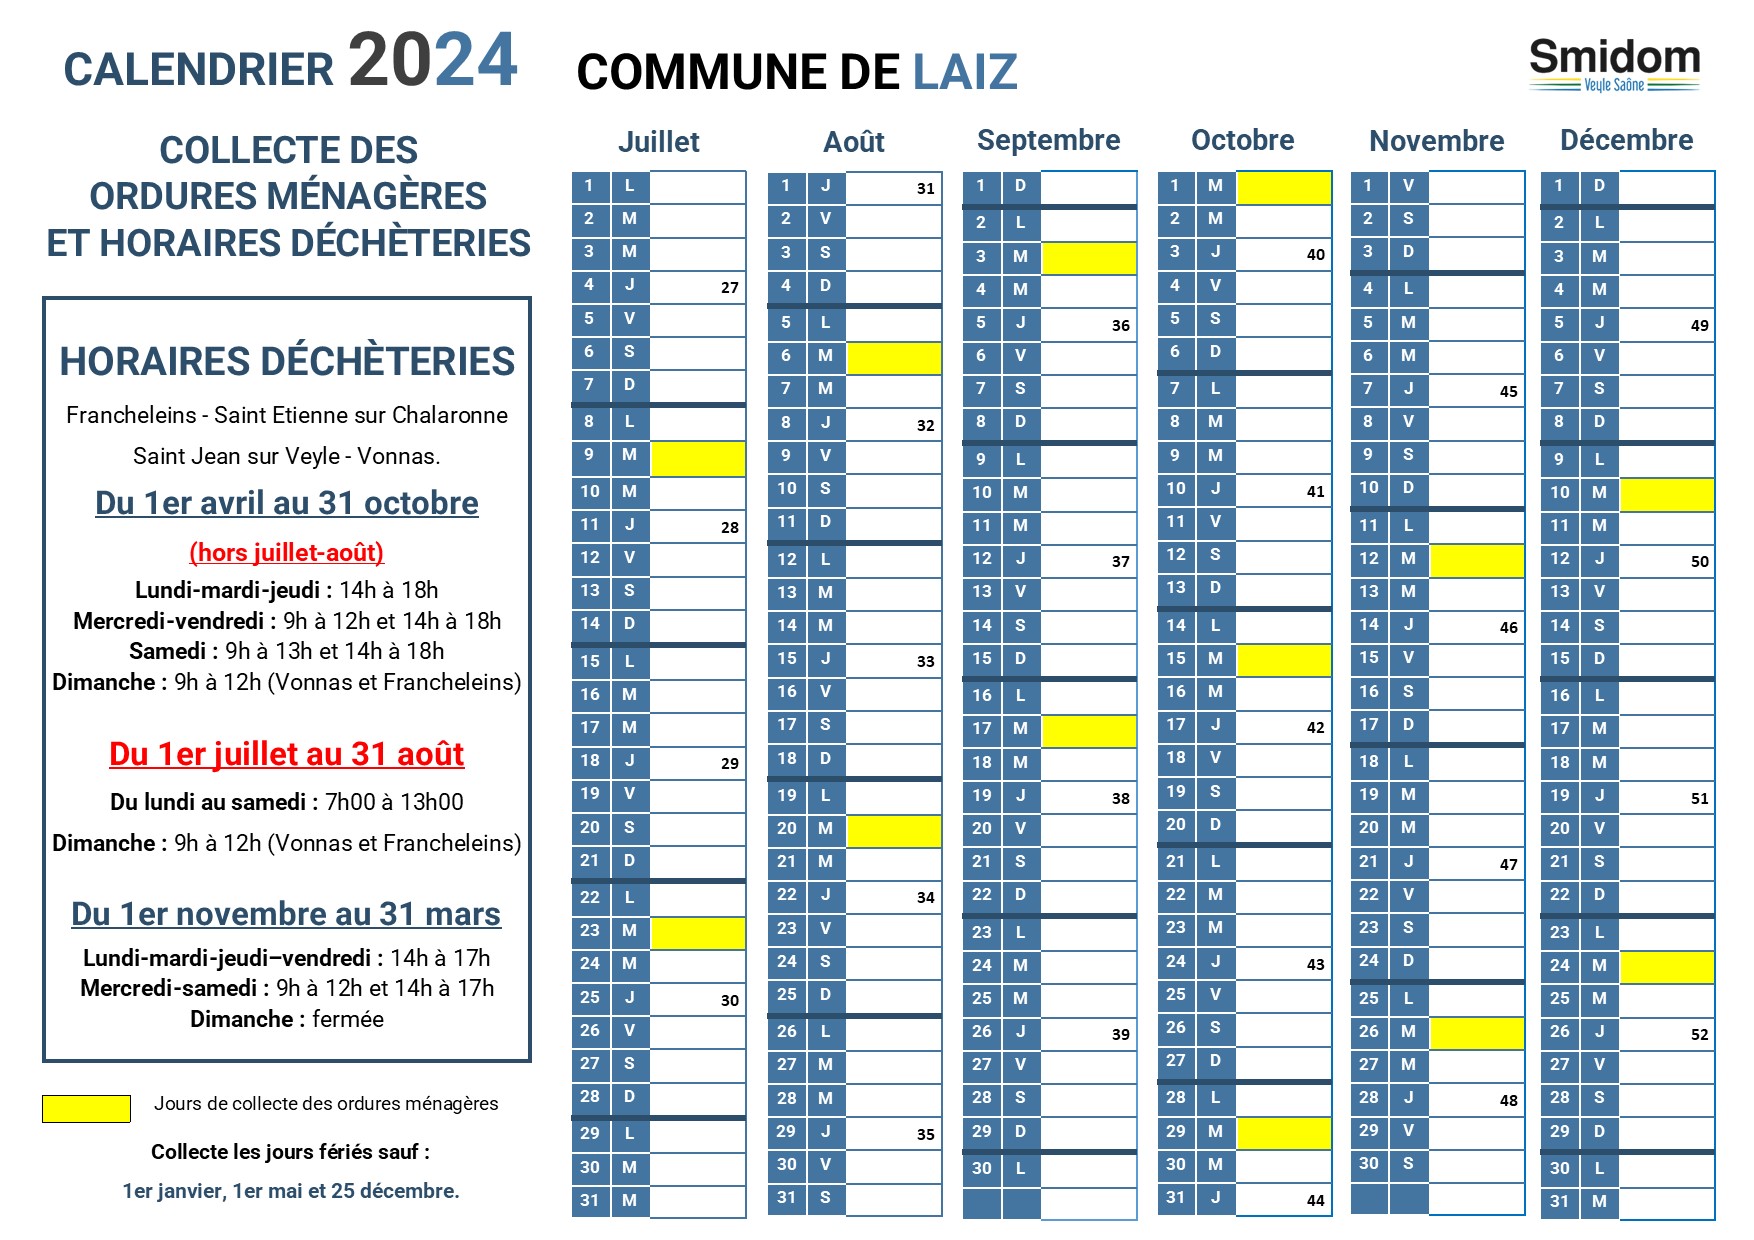 LAIZ - Calendrier 2024 - 2.jpg